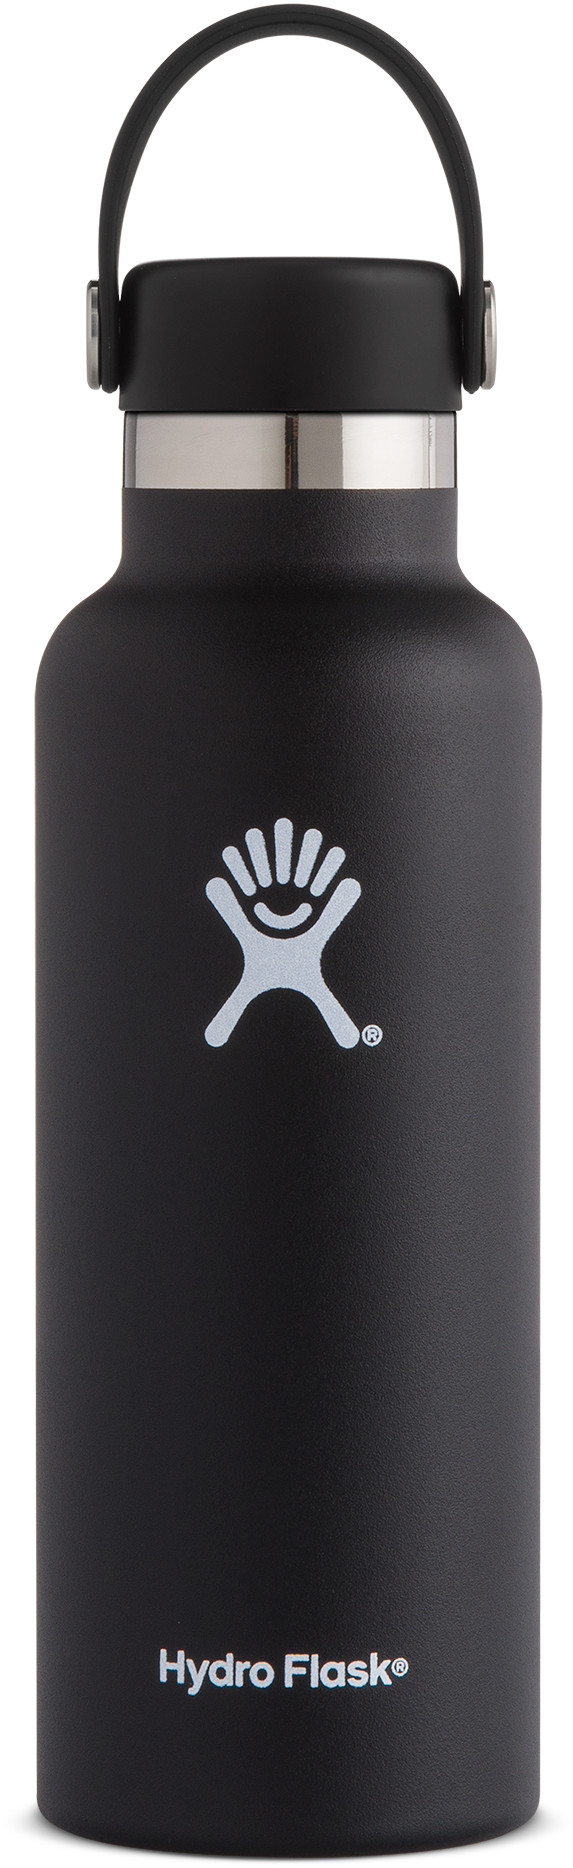 Hydro Flask Standard-Mouth Vacuum Water Bottle with Flex Cap - 18 fl. oz.